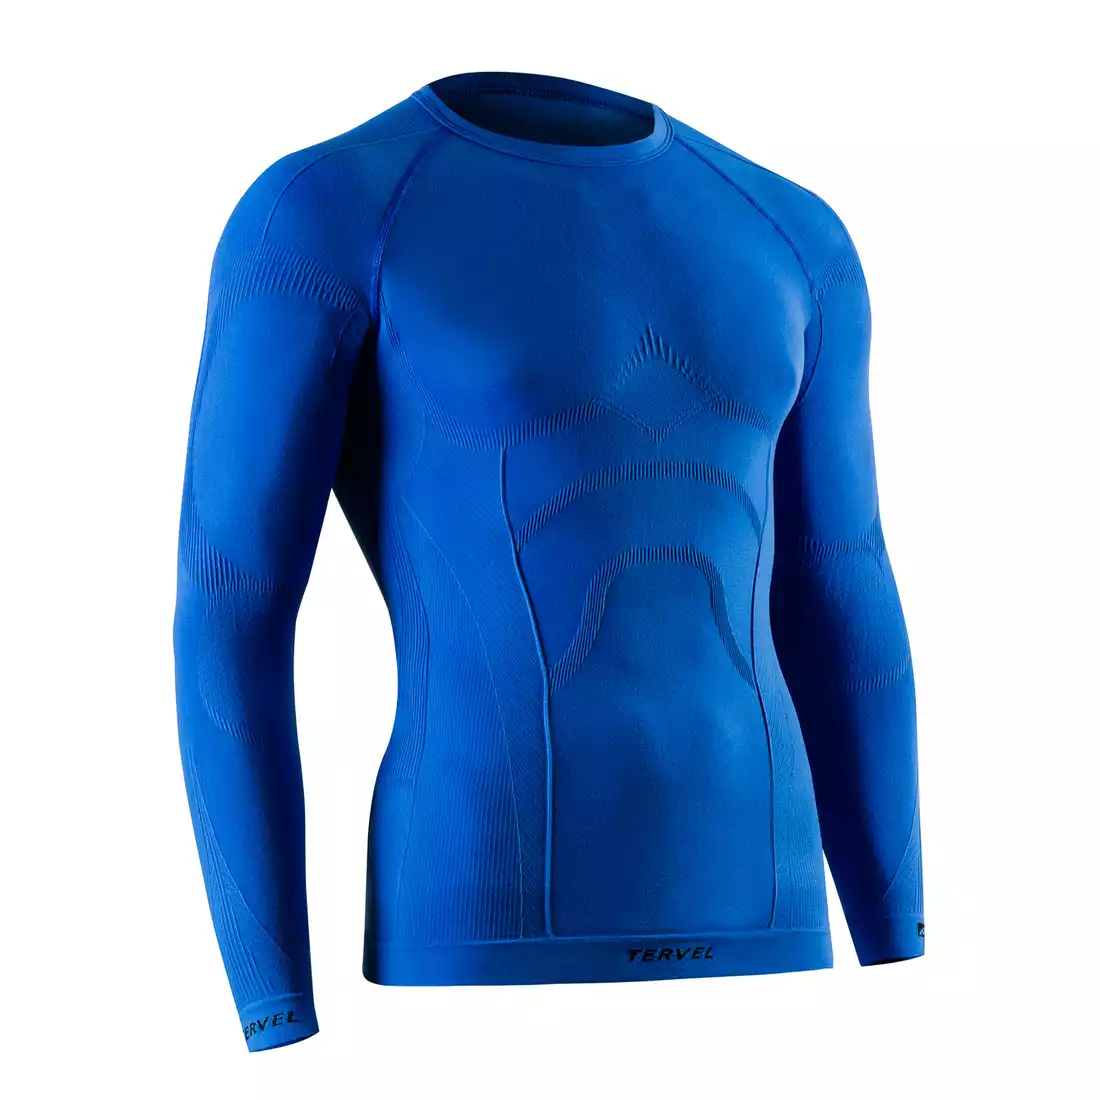 TERVEL COMFORTLINE 1002 - męska koszulka termoaktywna, długi rękaw, kolor: Niebieski